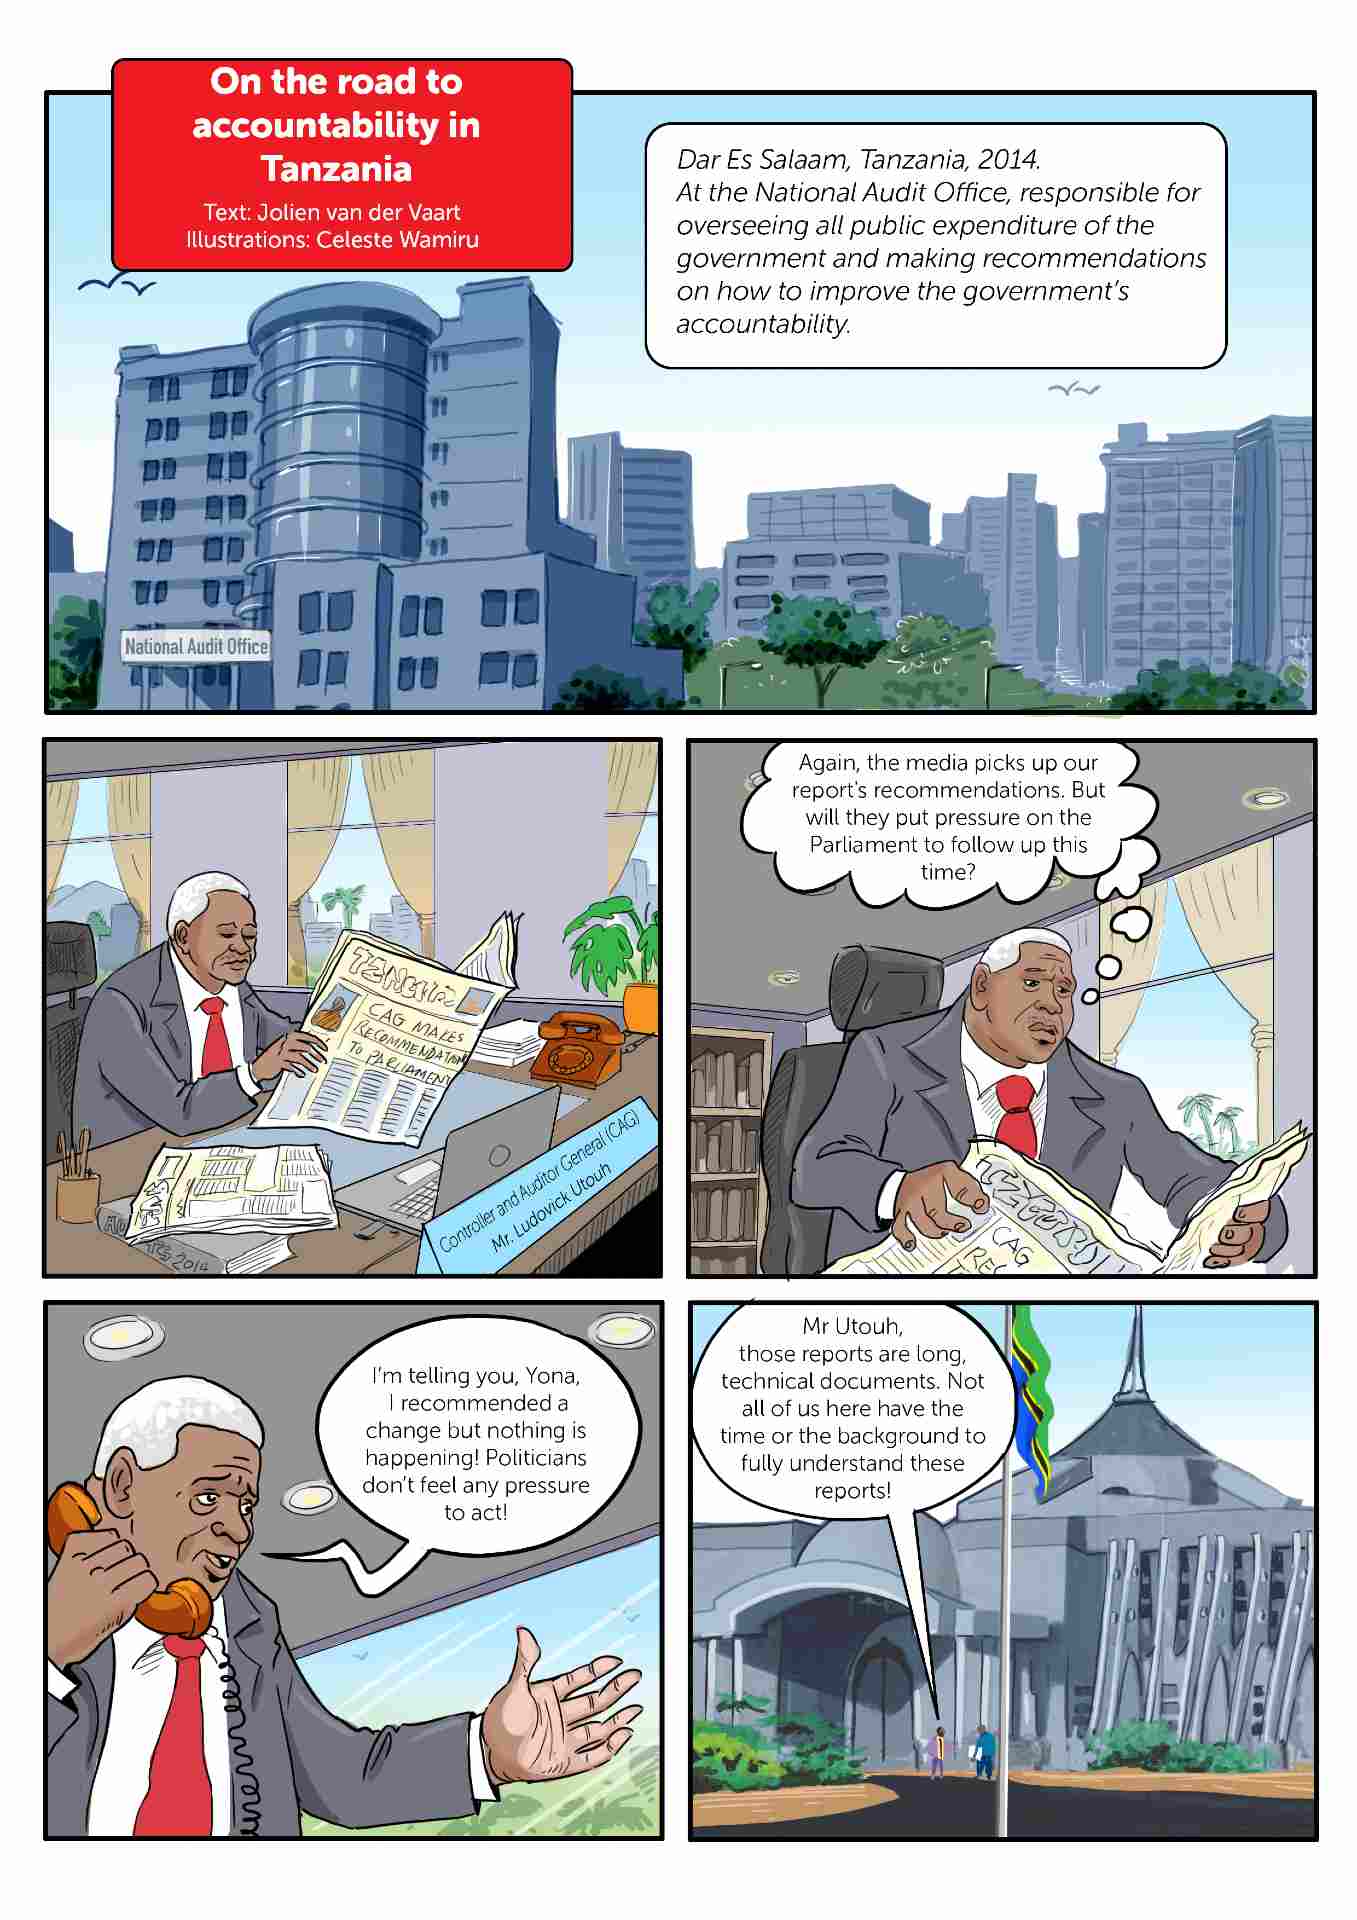 Comic strip about accountability in Tanzania slide 1